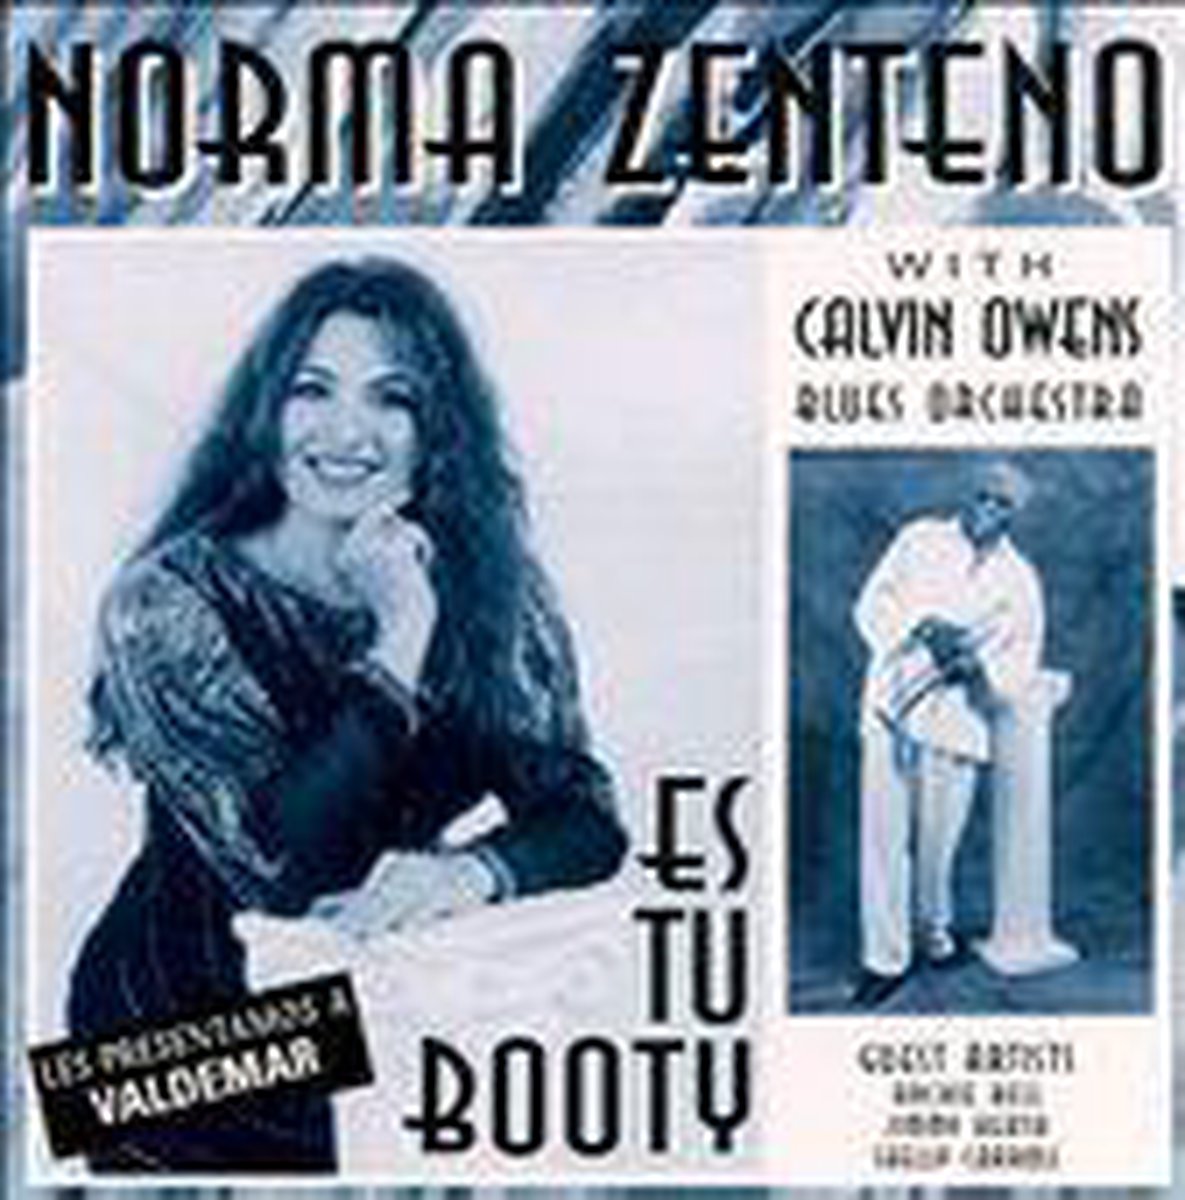 Es Tu Booty - Norma Zenteno